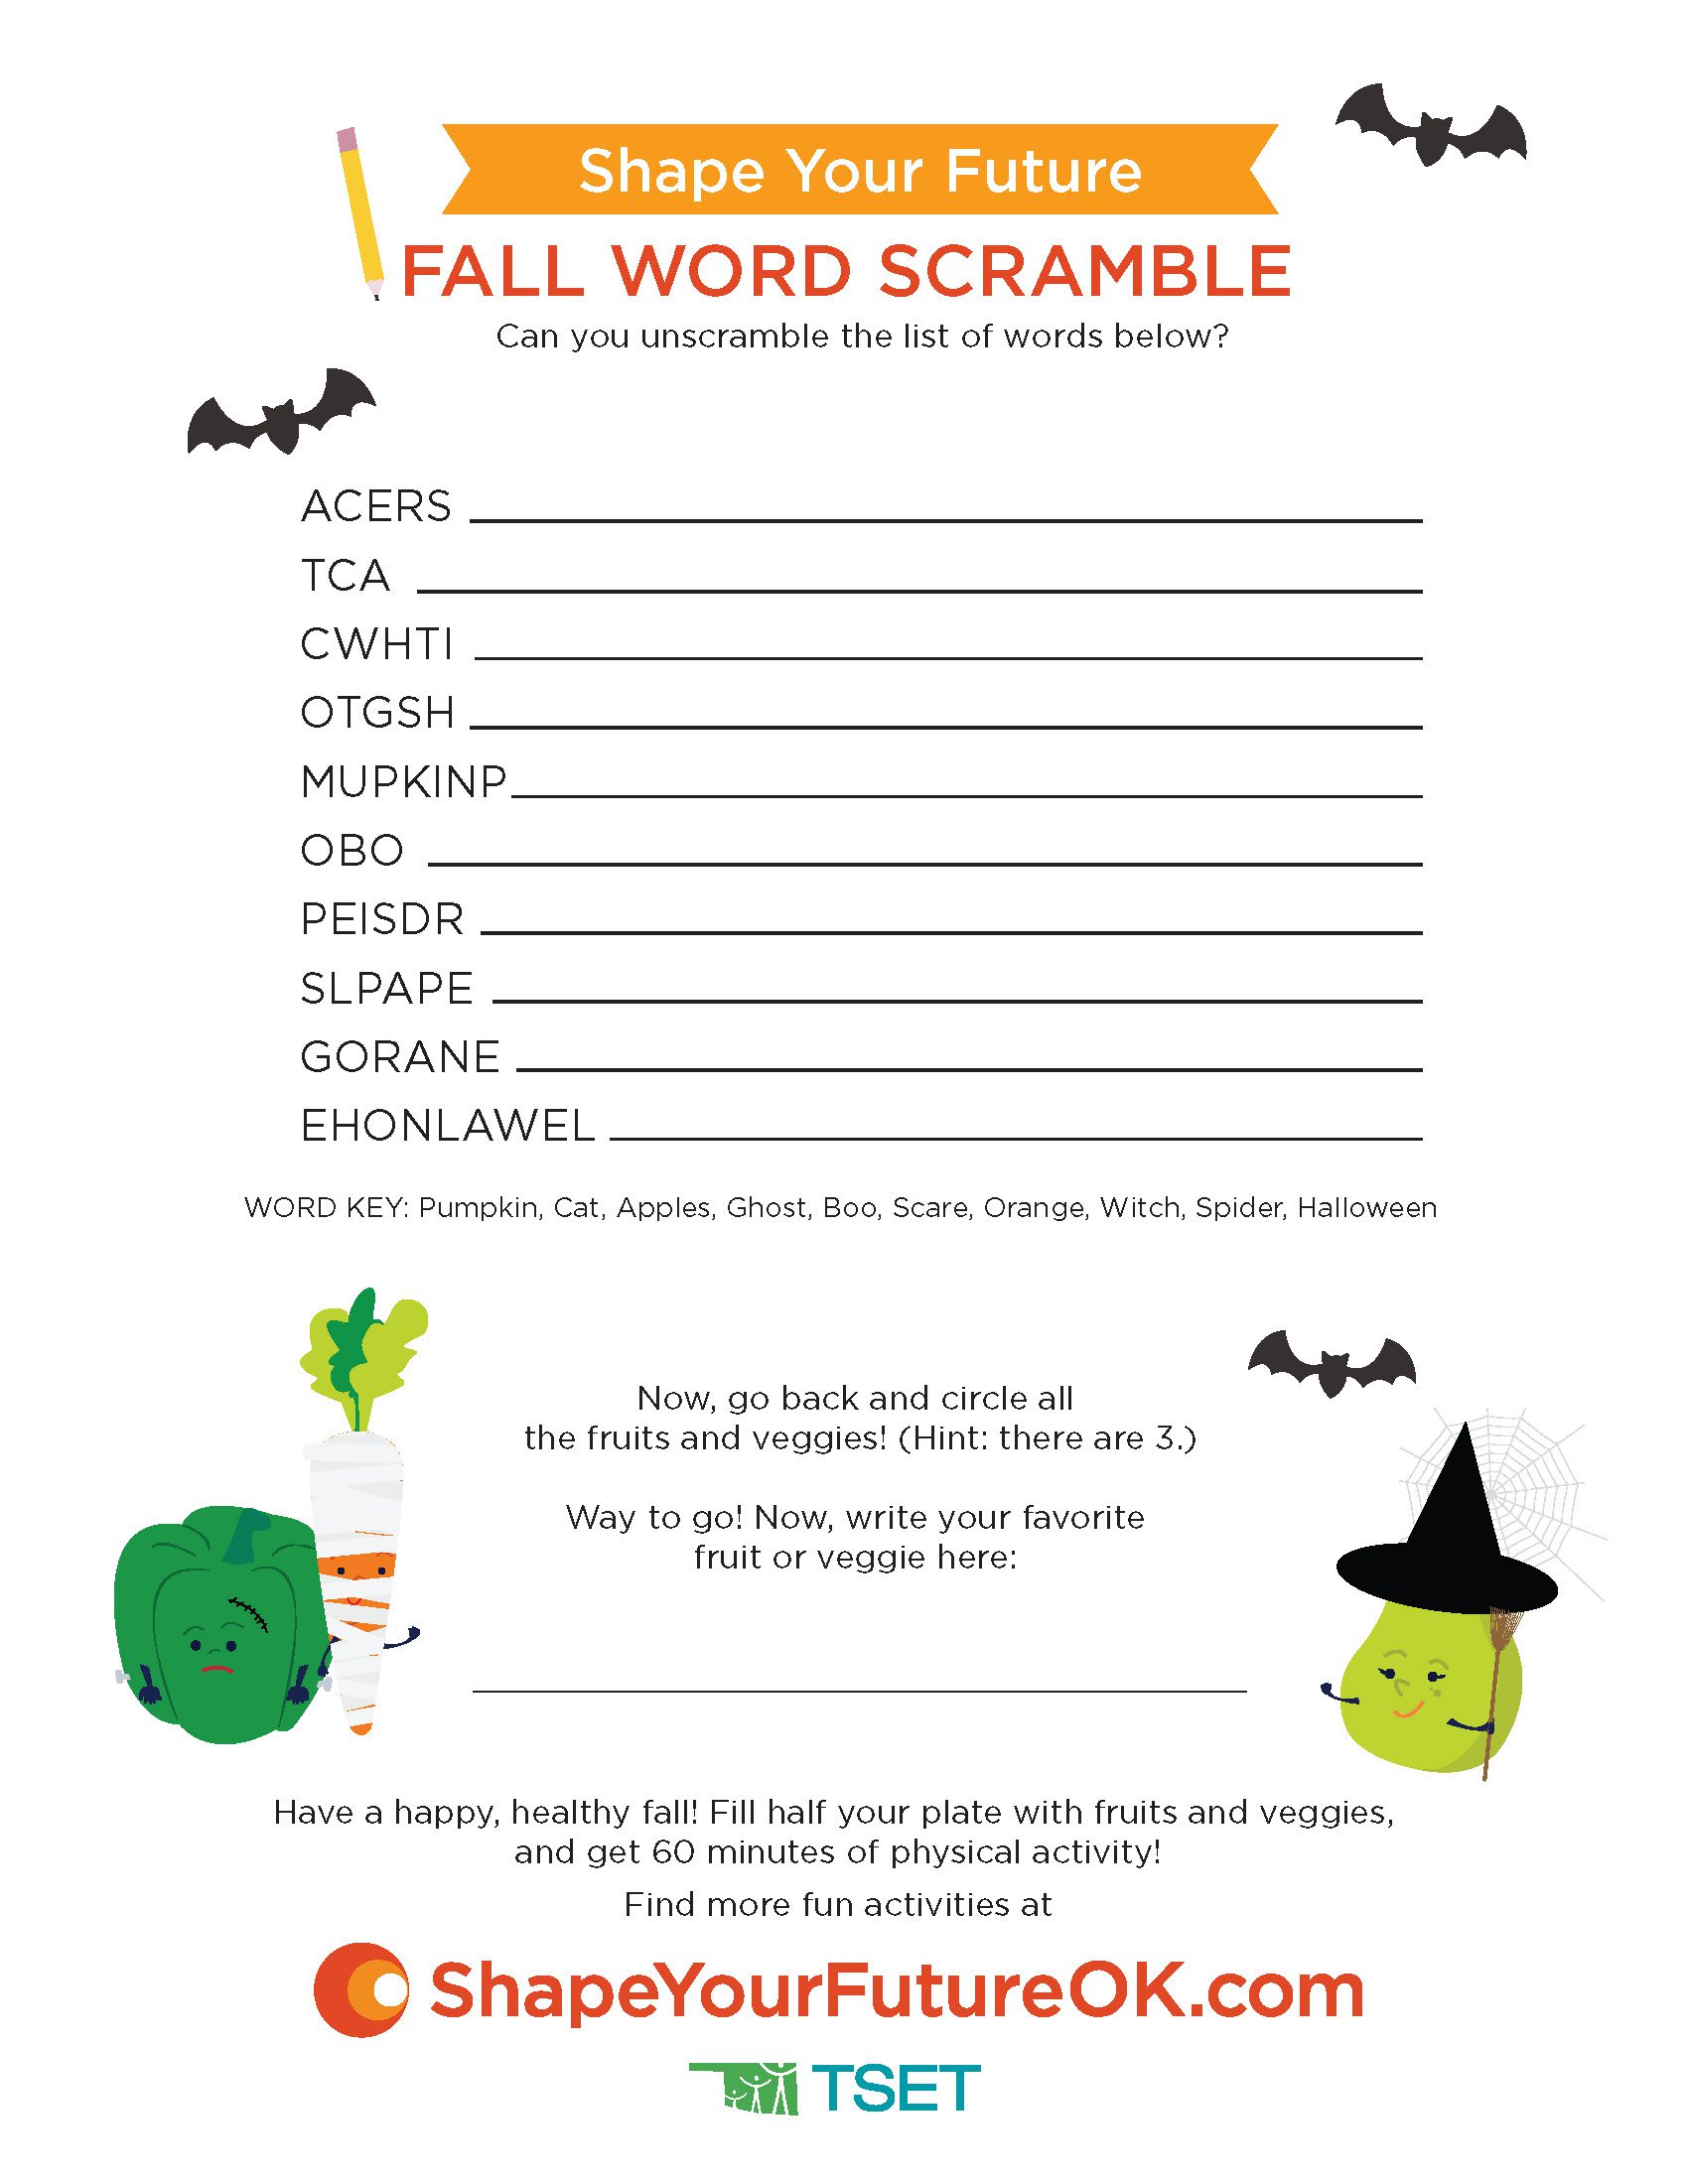 Fall word scramble